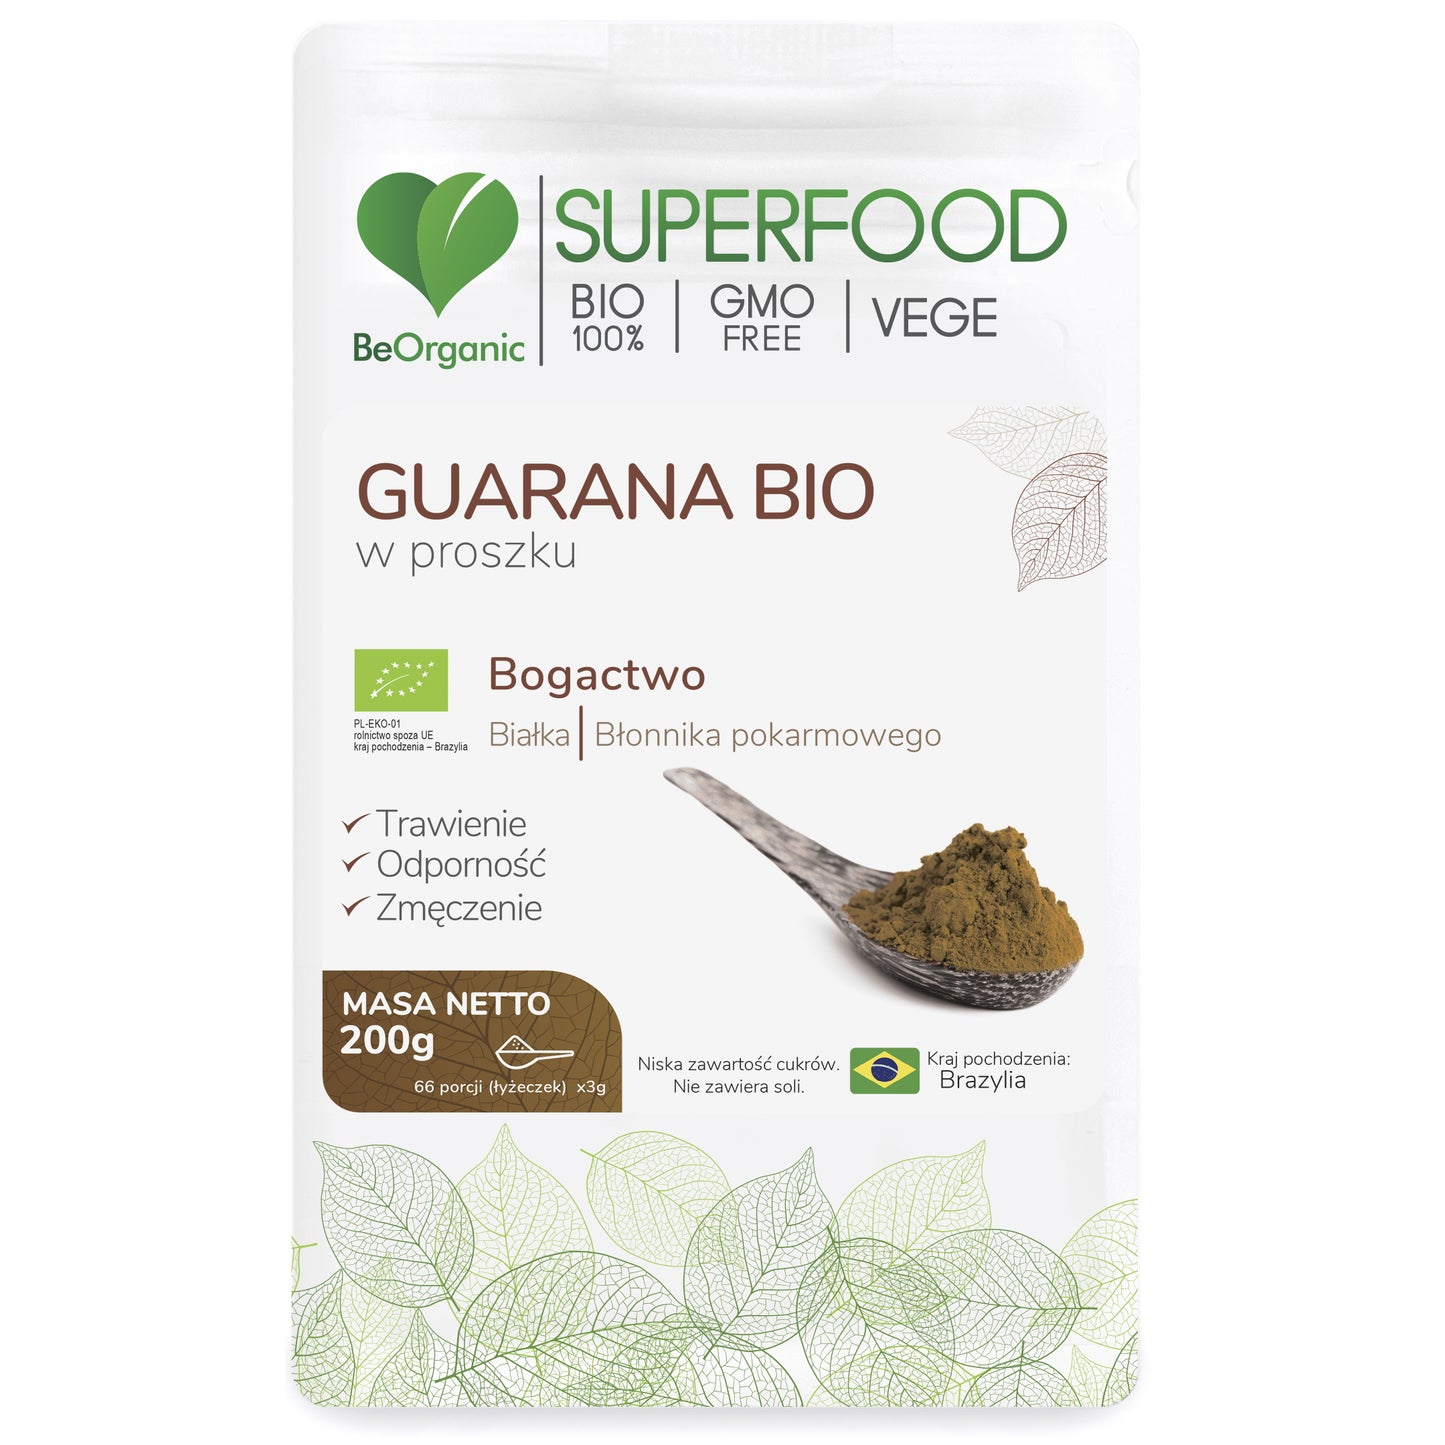 BeOrganic Organic Guarana powder, 200g